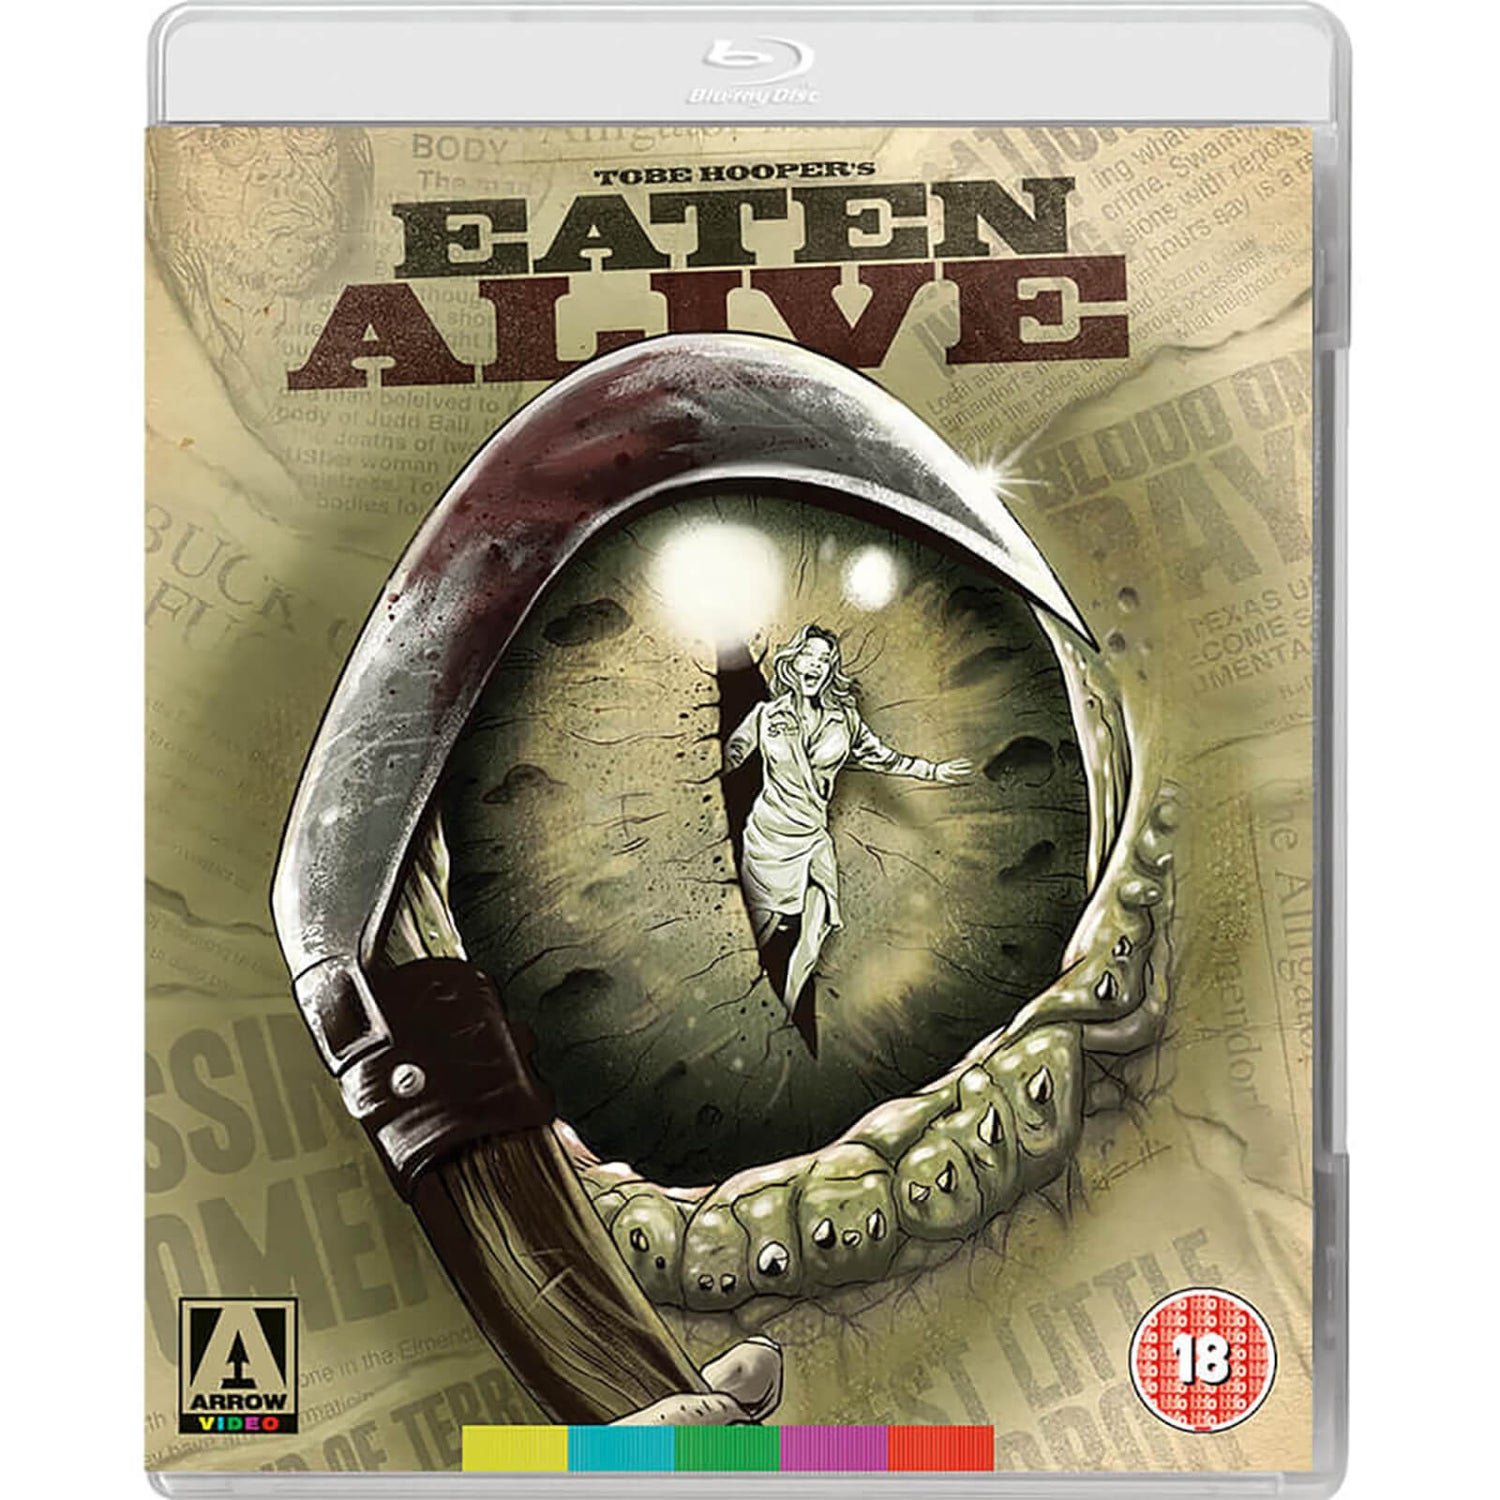 Eaten Alive Blu-ray